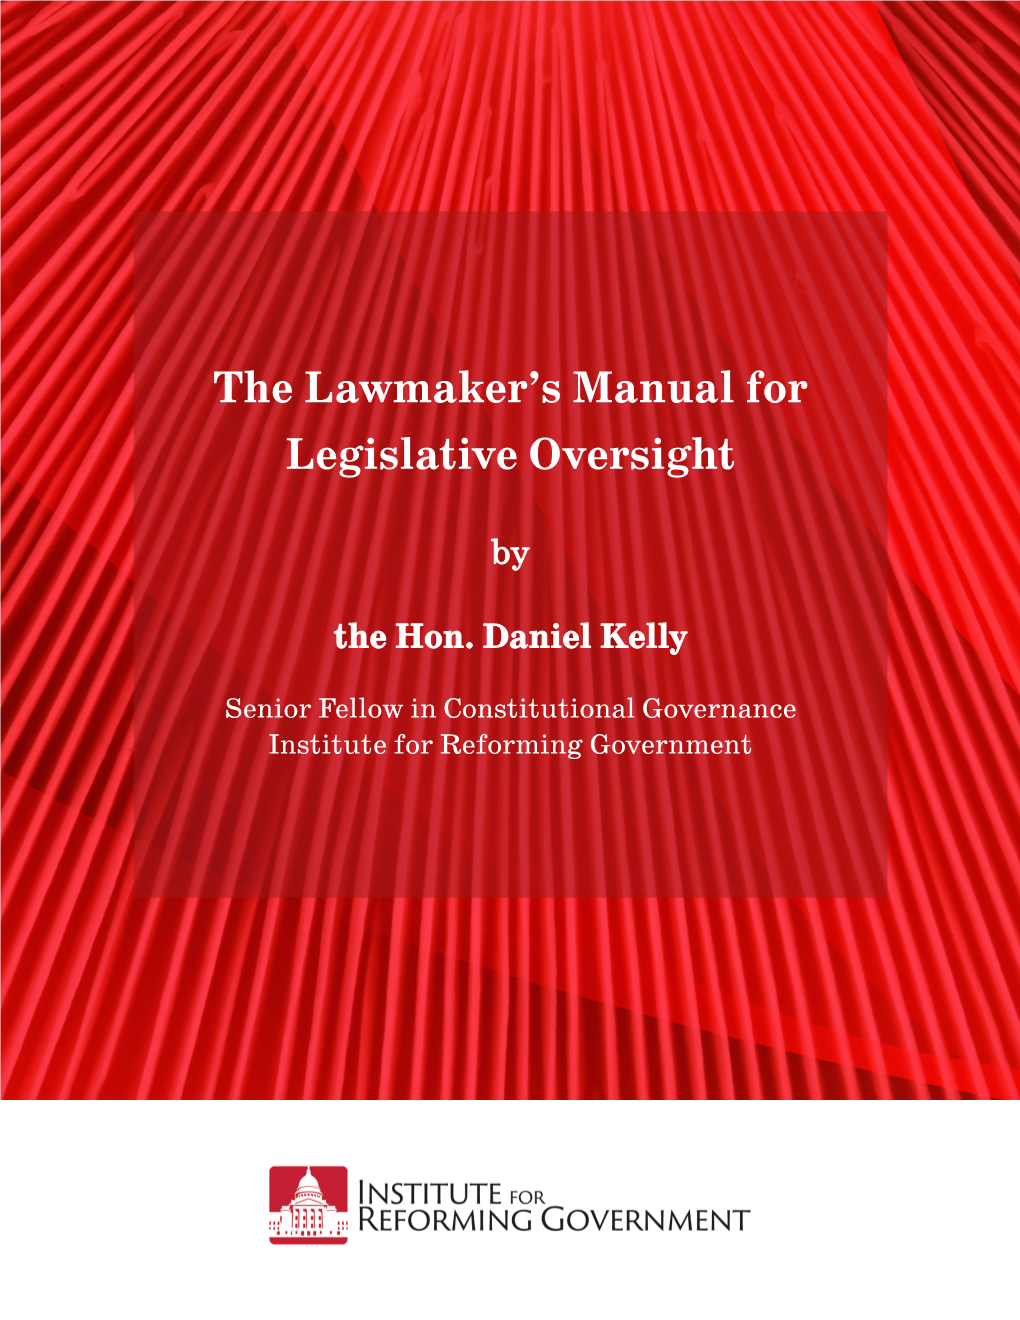 The Lawmaker's Manual for Legislative Oversight